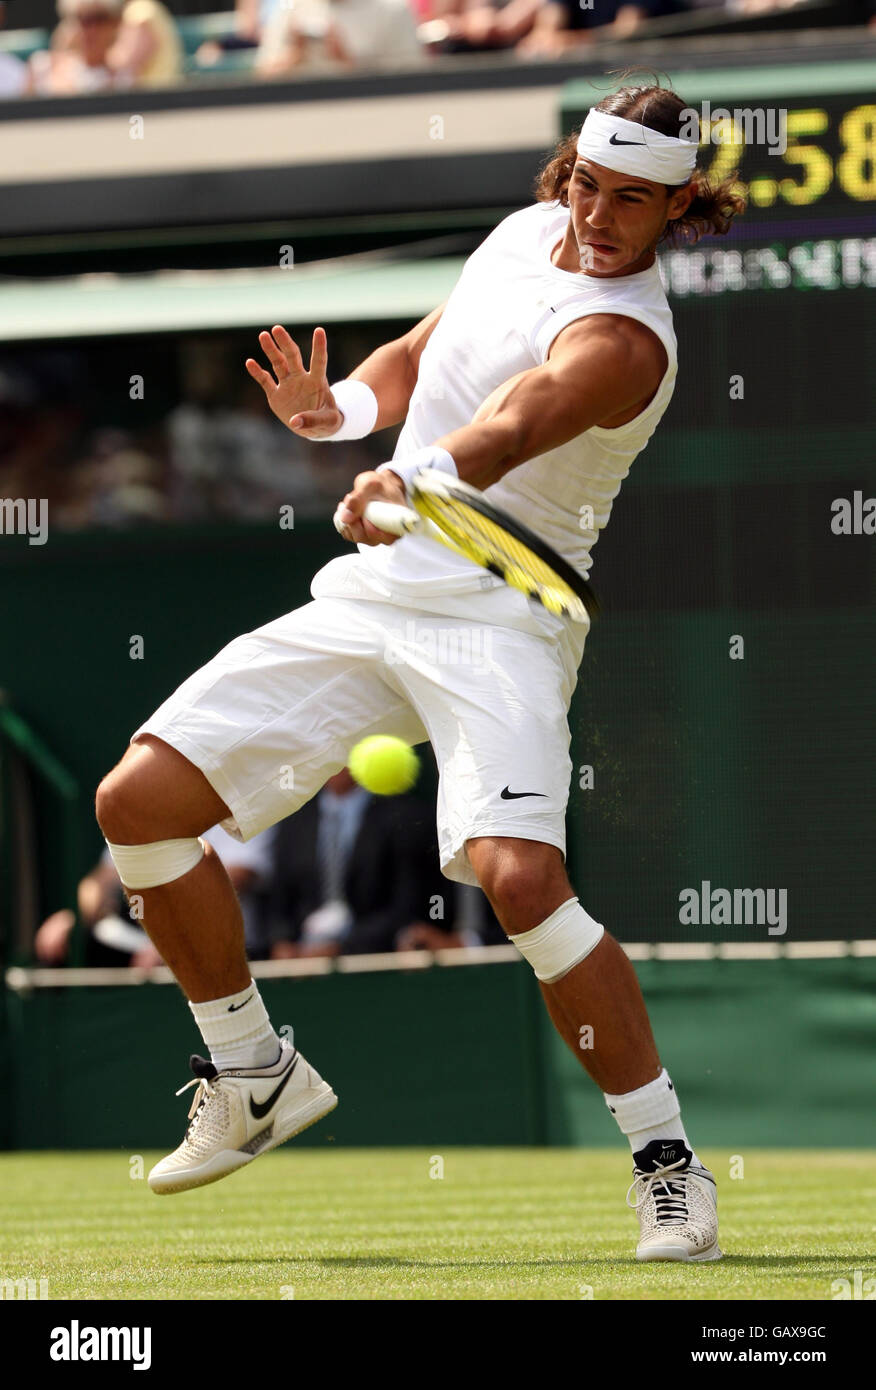 Spagna Rafael Nadal durante i Campionati di Wimbledon 2008 presso l'All England Tennis Club di Wimbledon. Foto Stock